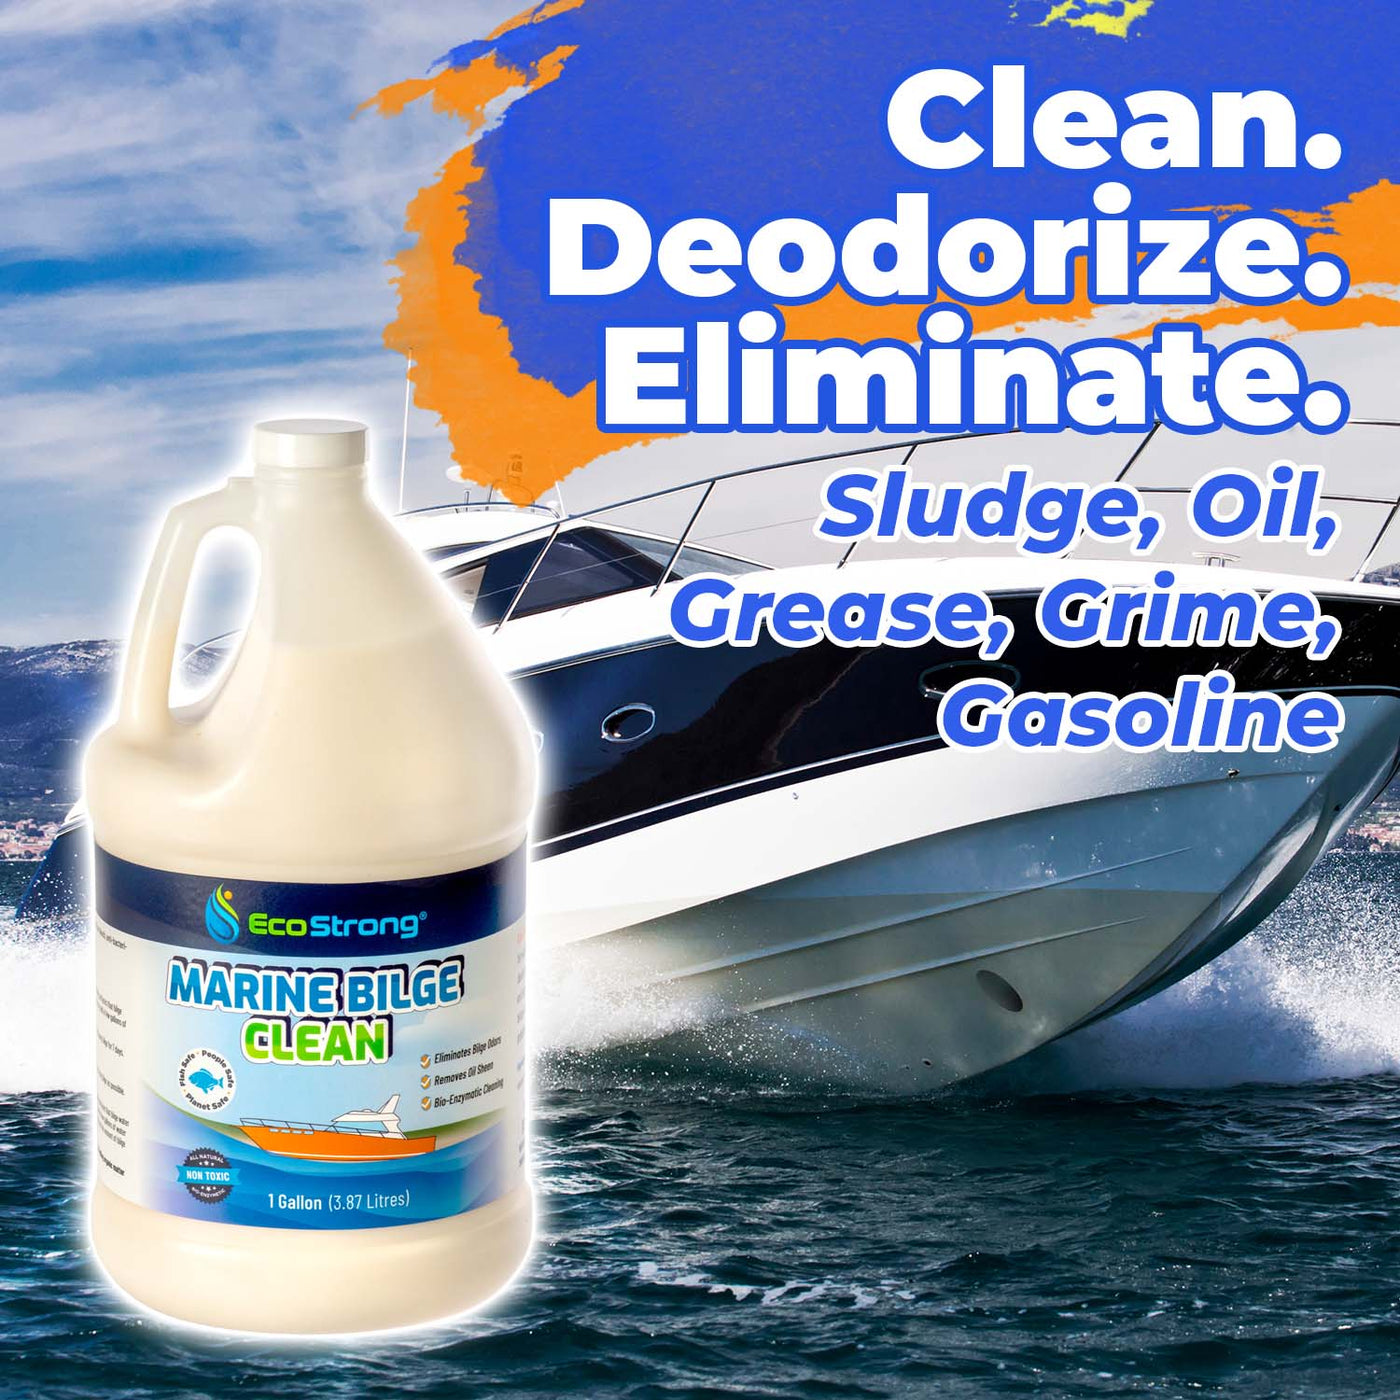 EcoStrong Marine Bilge Clean 1 Gallon #size_1-gallon-jug